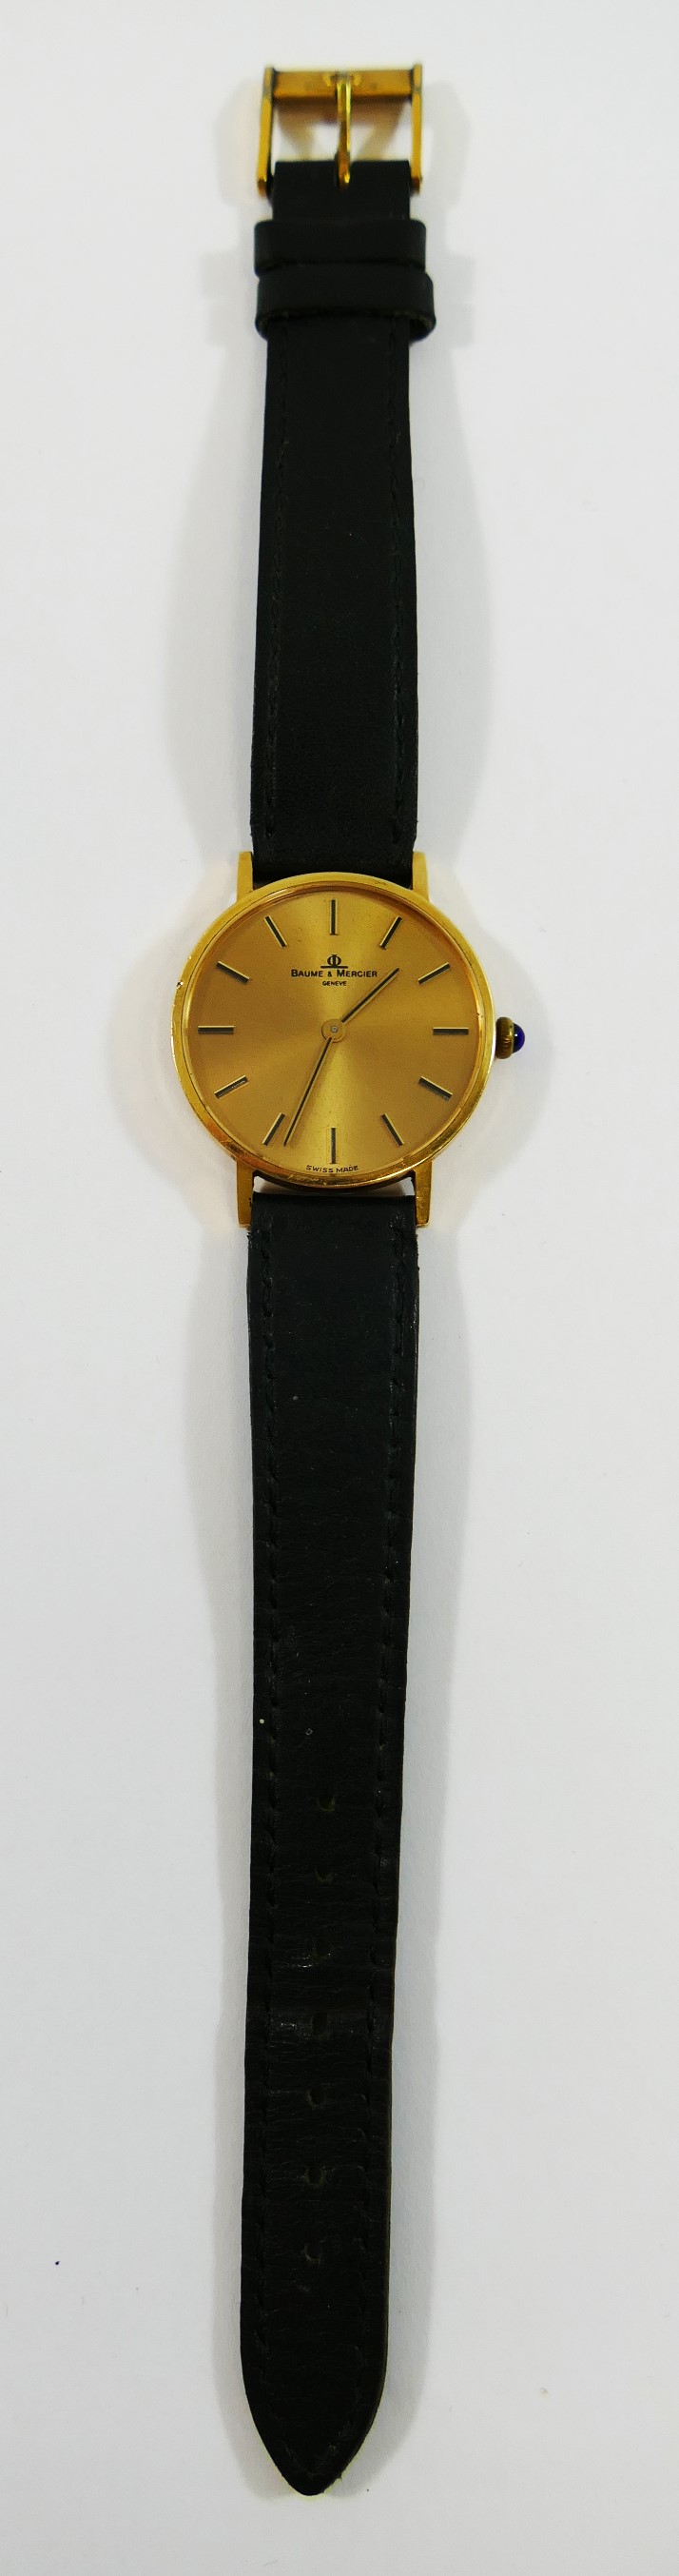 A Baume and Mercier gentleman's wrist watch, in yellow metal case, - Image 3 of 3